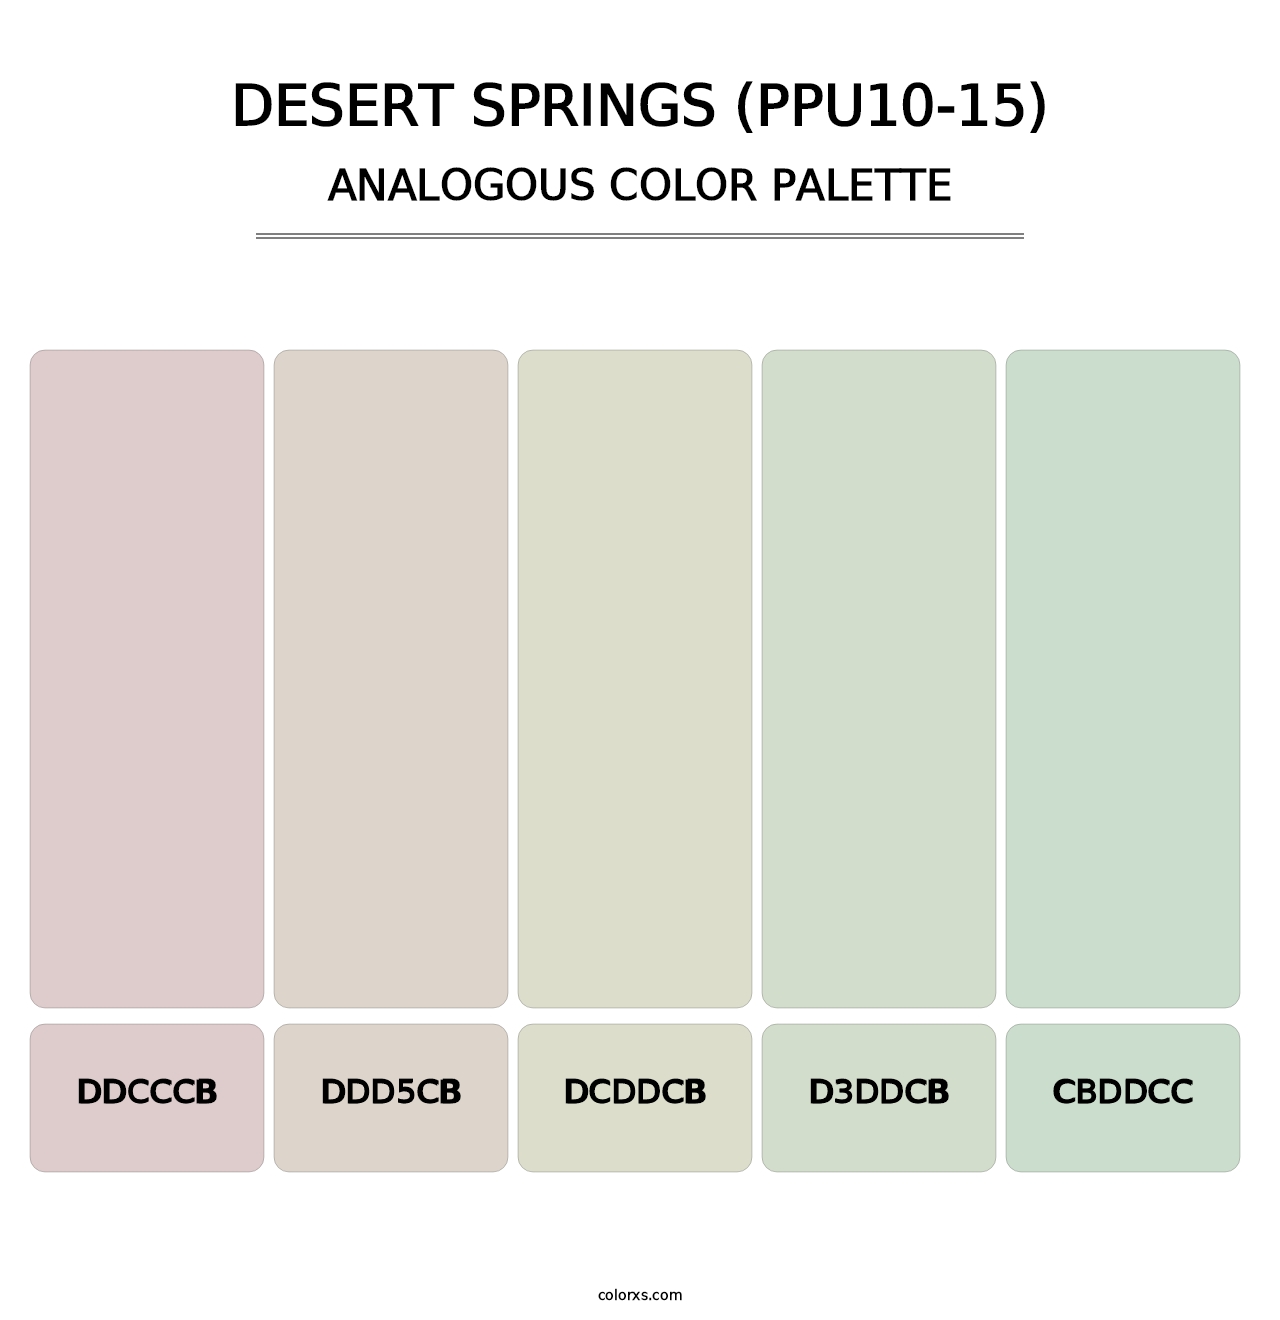 Desert Springs (PPU10-15) - Analogous Color Palette